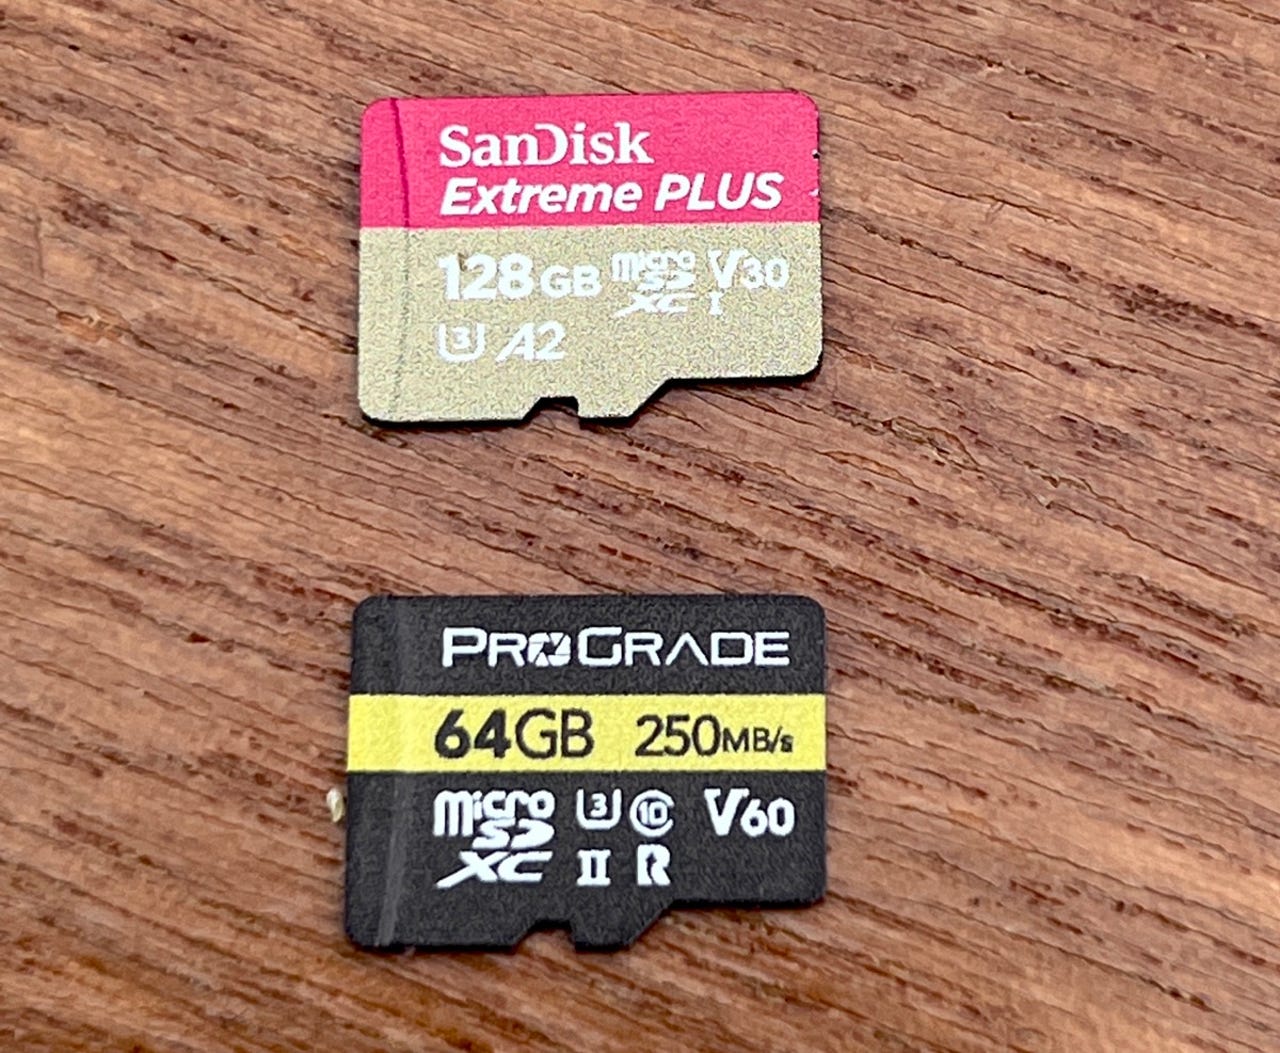 SanDisk Extreme Plus 64GB microSD Class 10 Memory Card